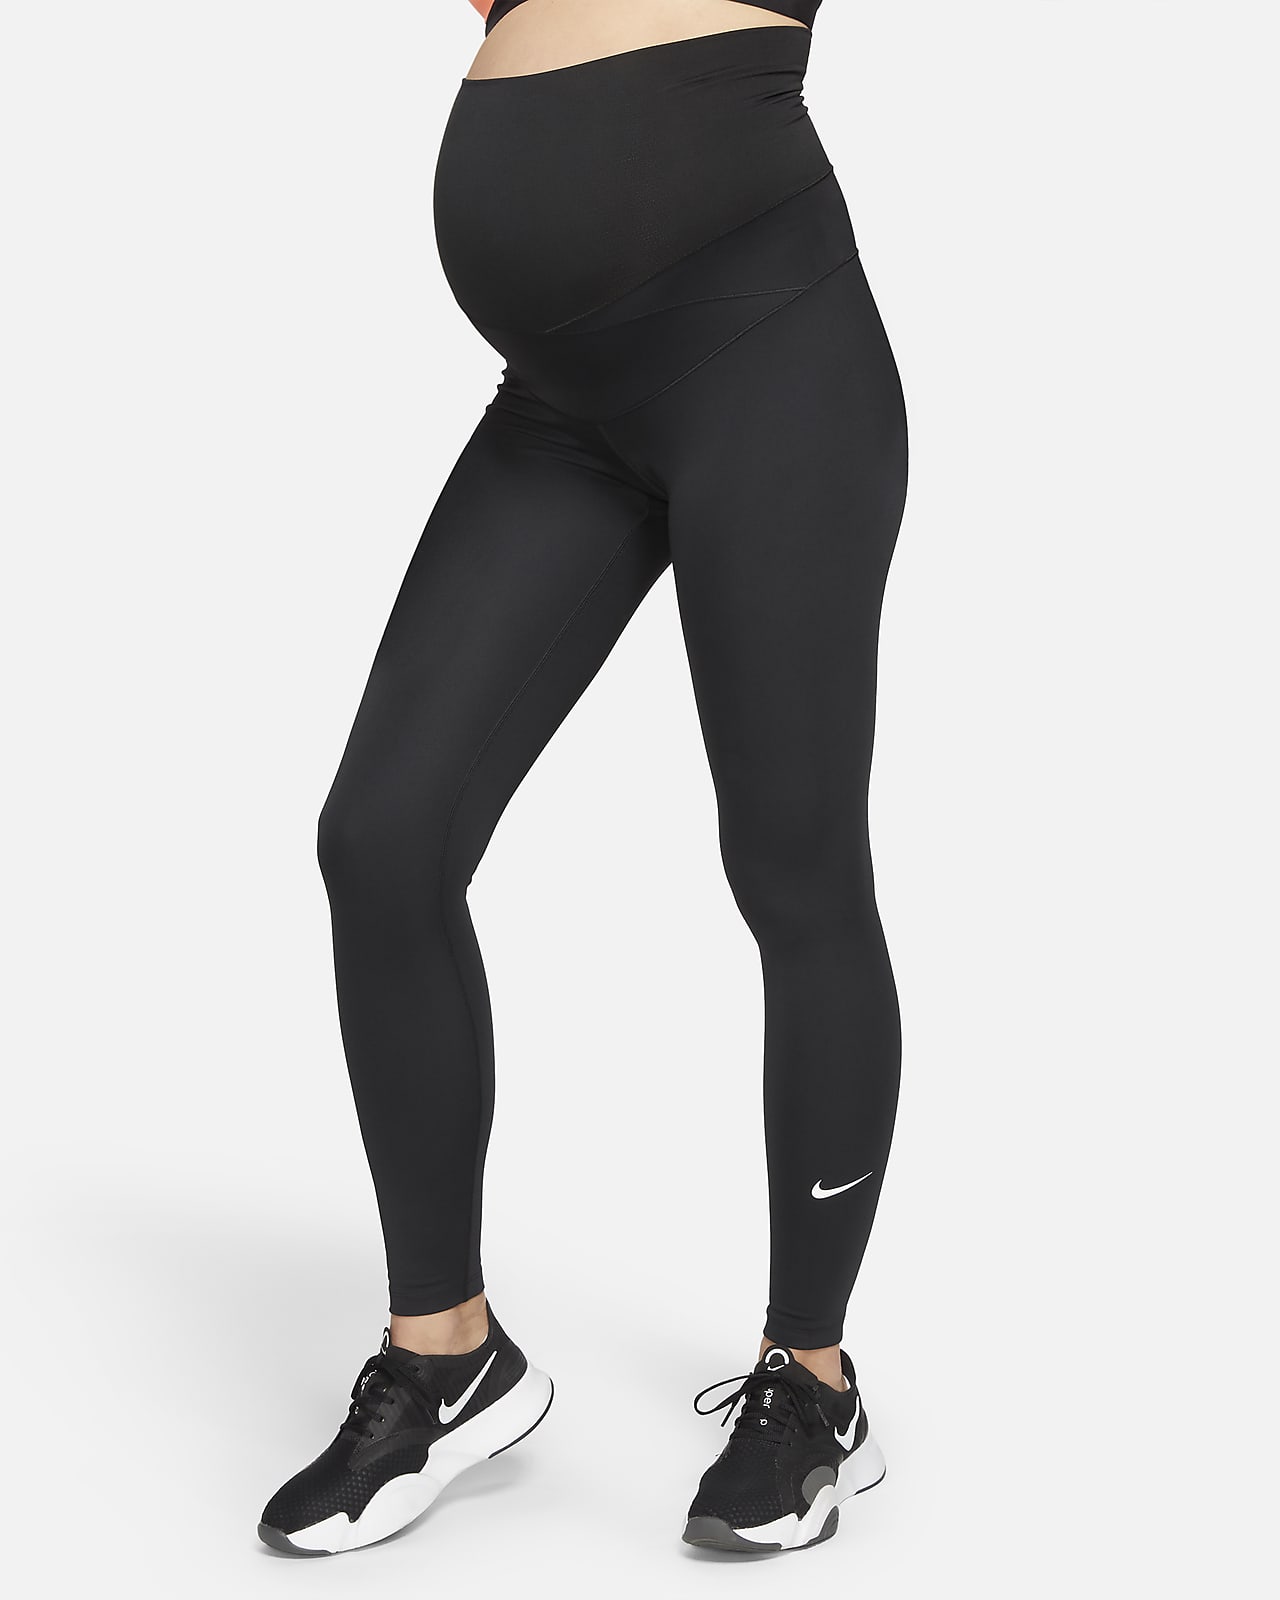 Nike One (M) magas derekú női leggings (kismamáknak)